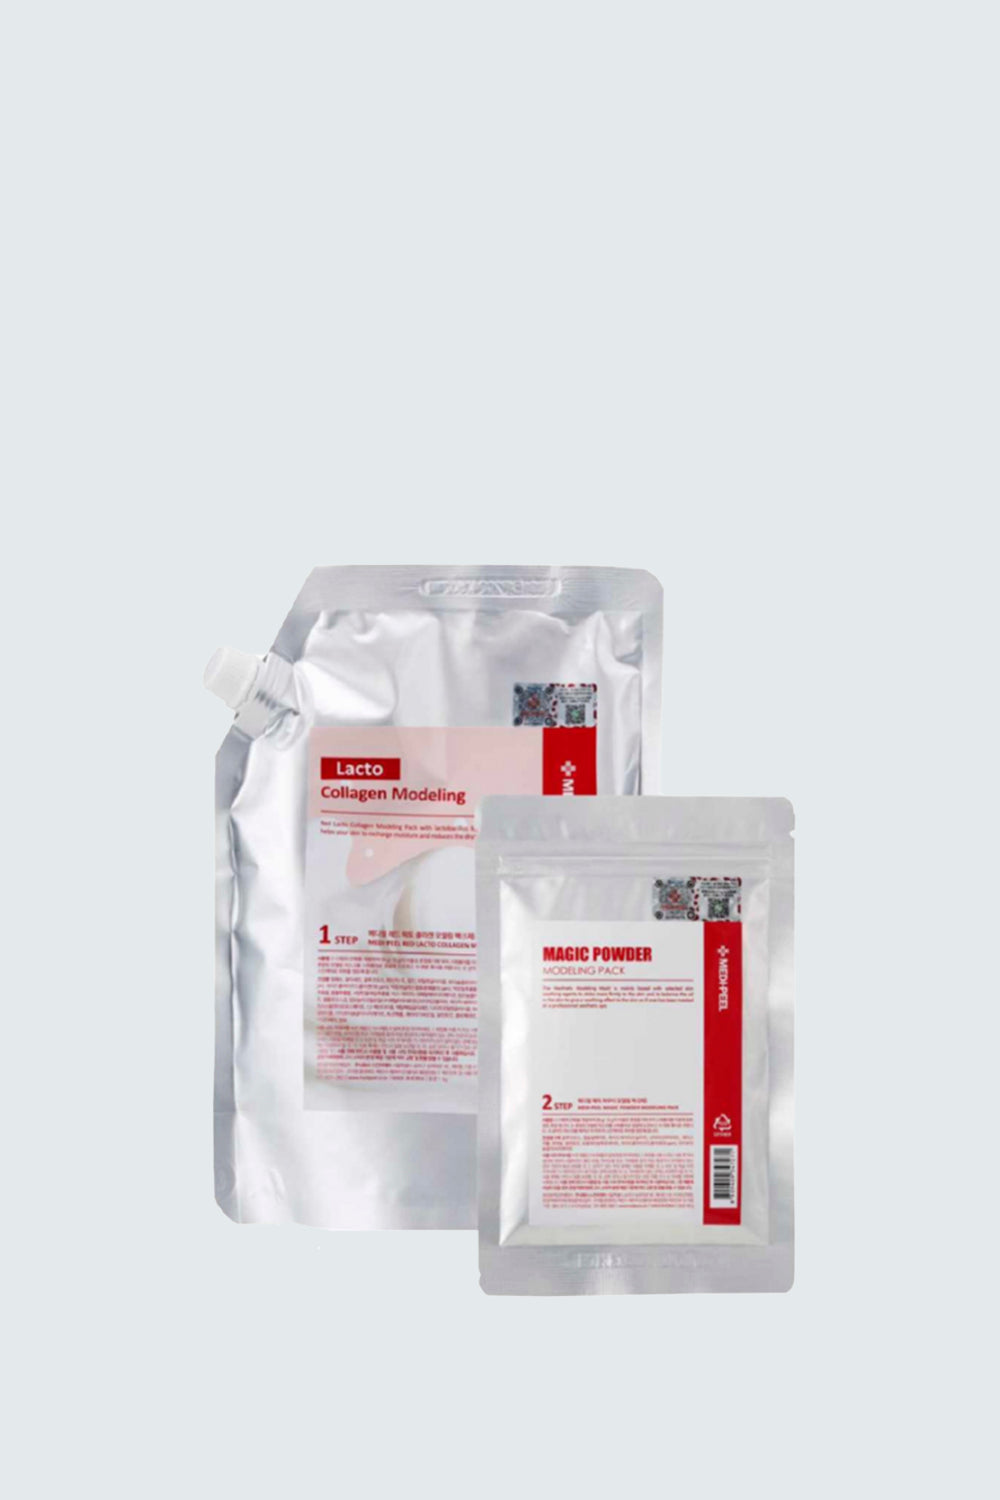 Red Lacto Collagen Modelling Pack - 1kg x 1ea, 100g x 1ea MEDI-PEEL